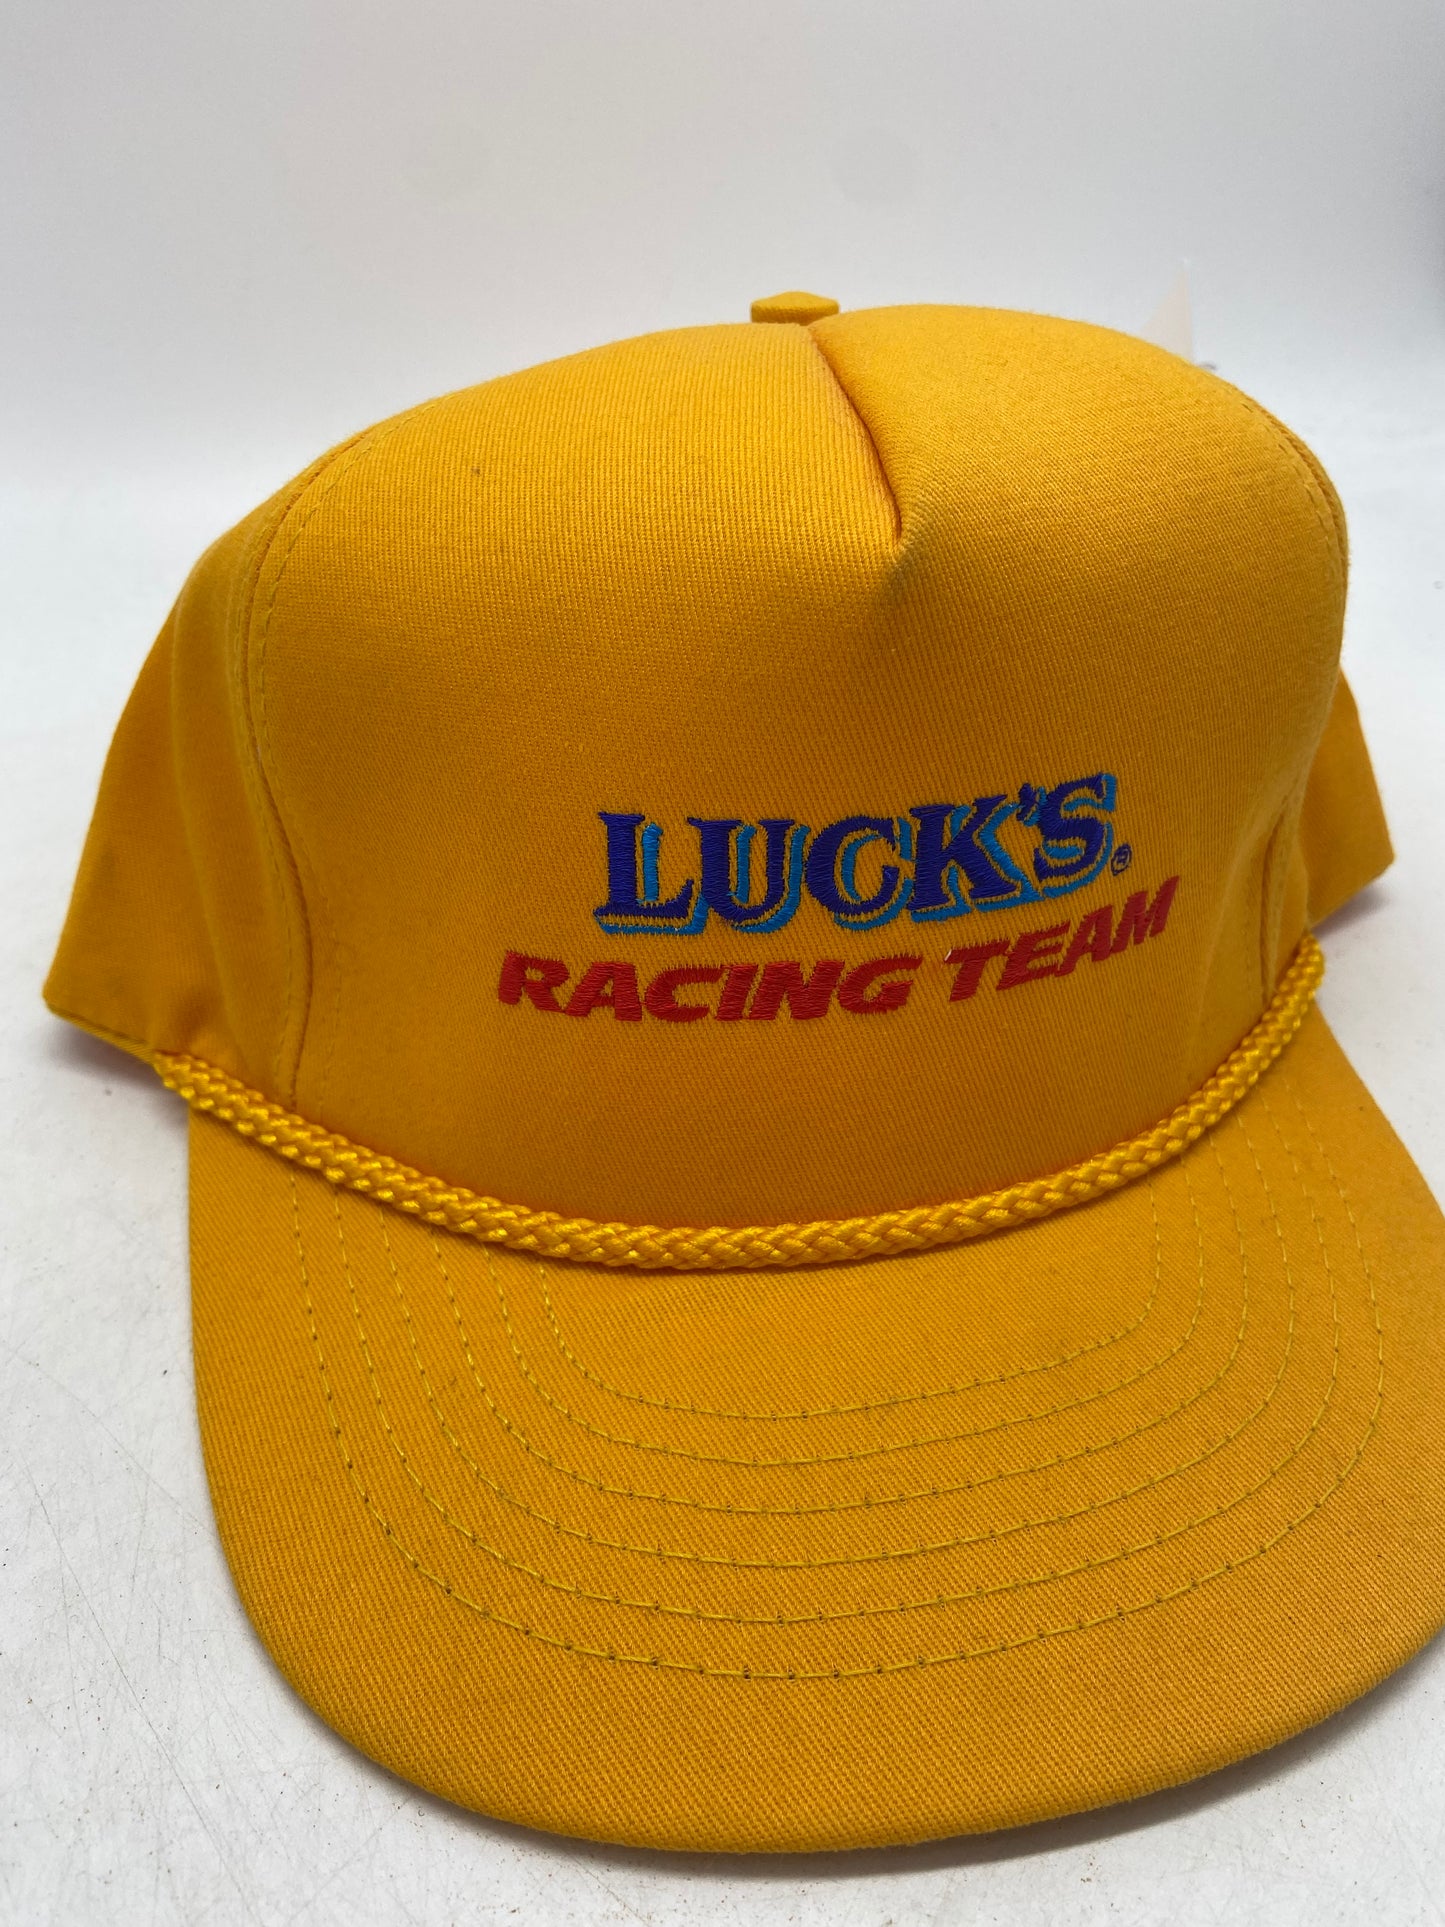 VTG Luck's Racing Team Snapback